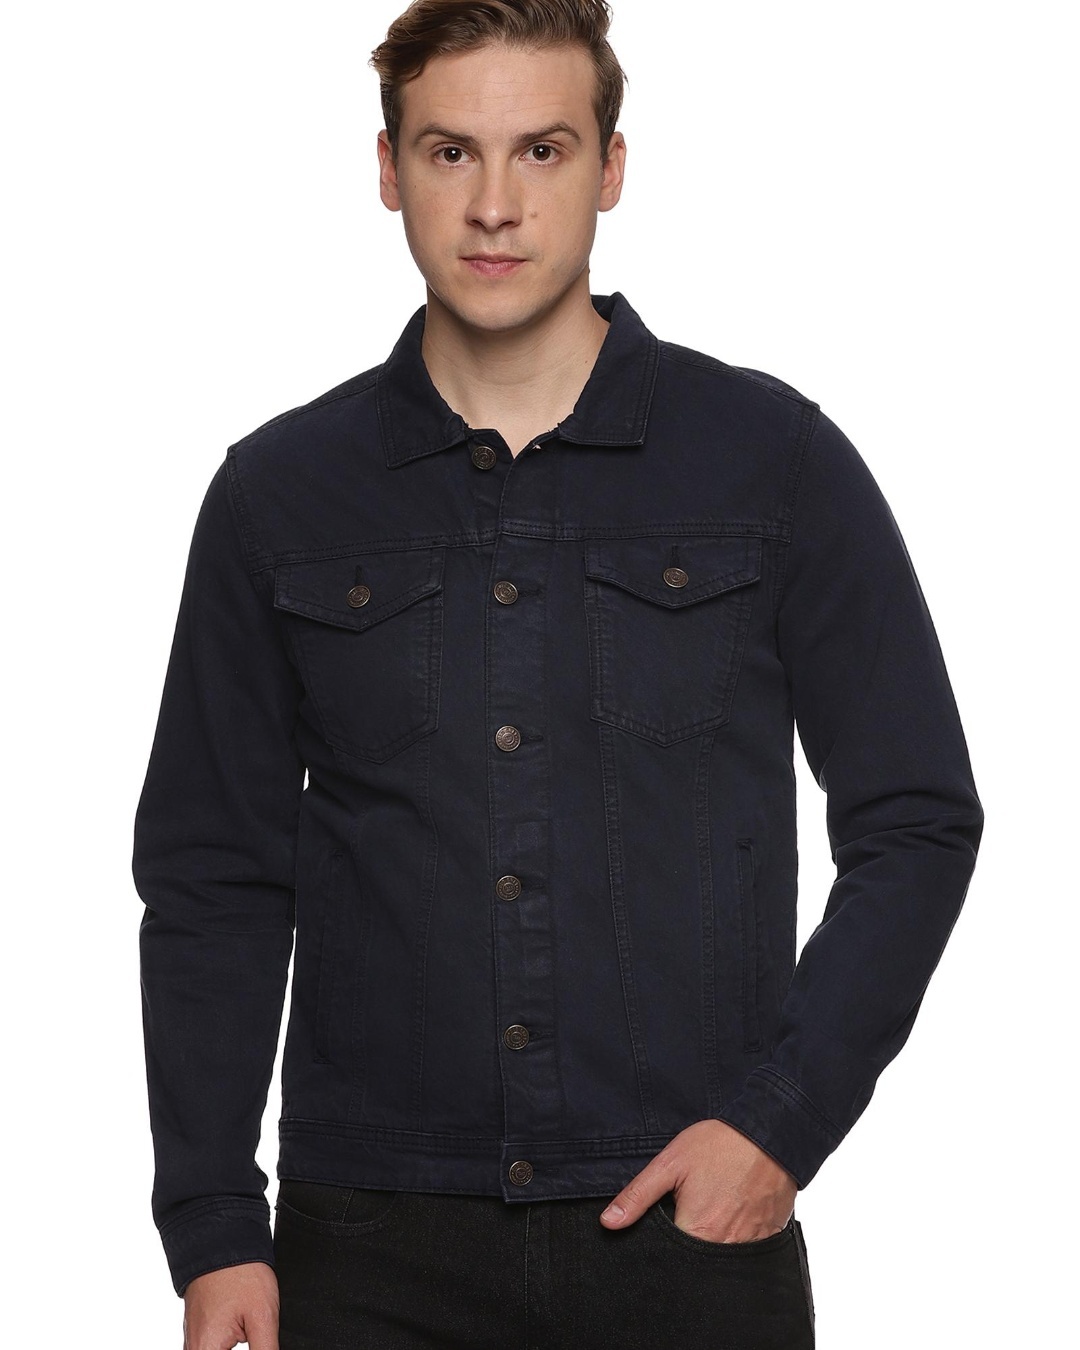 Buy Men's Stylish Full Sleeve Denim Jacket Online at Bewakoof